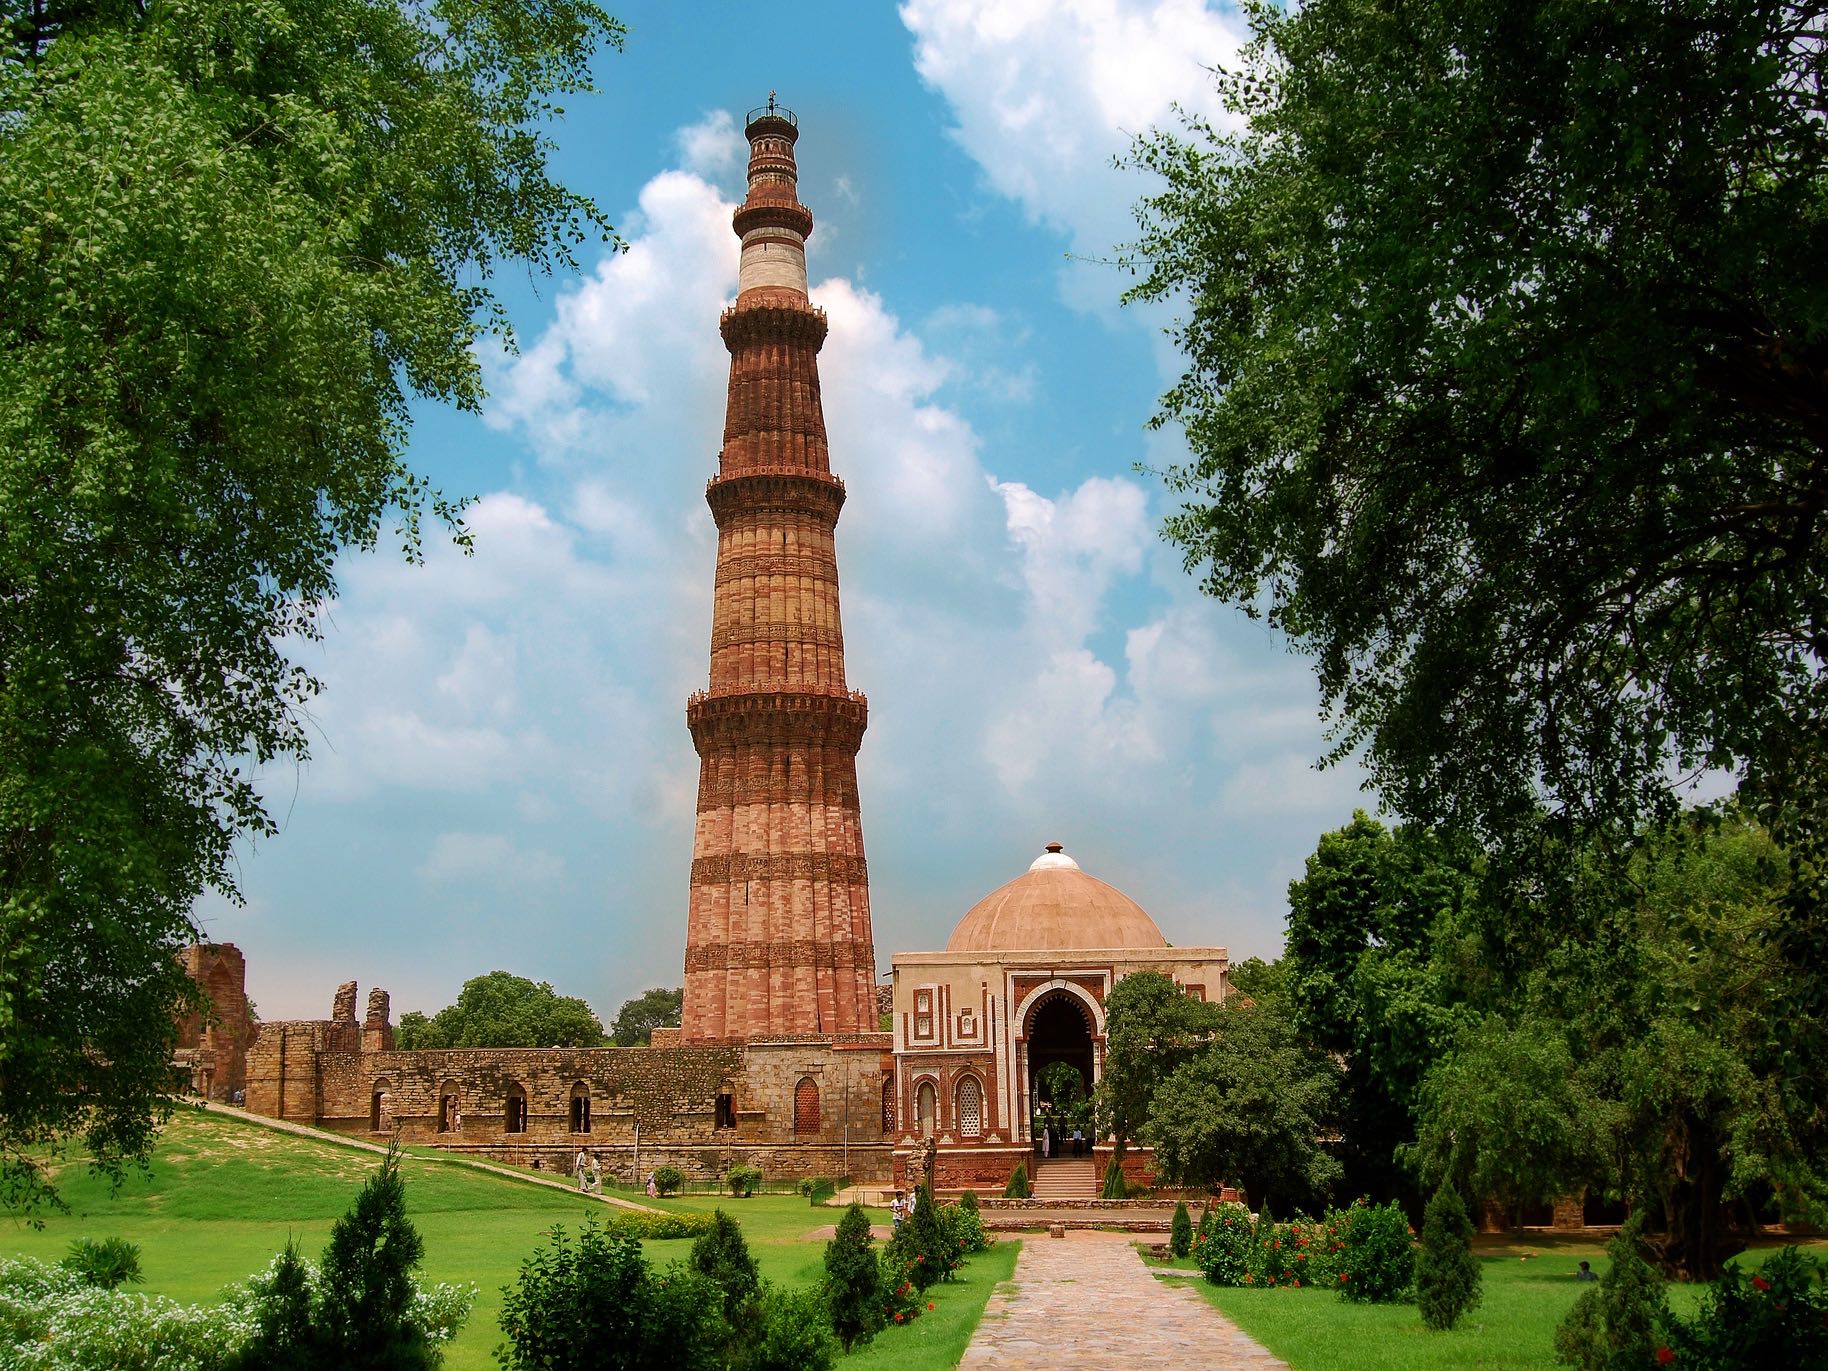 The beautiful religious buildings of the Qutub Minar, Delhi